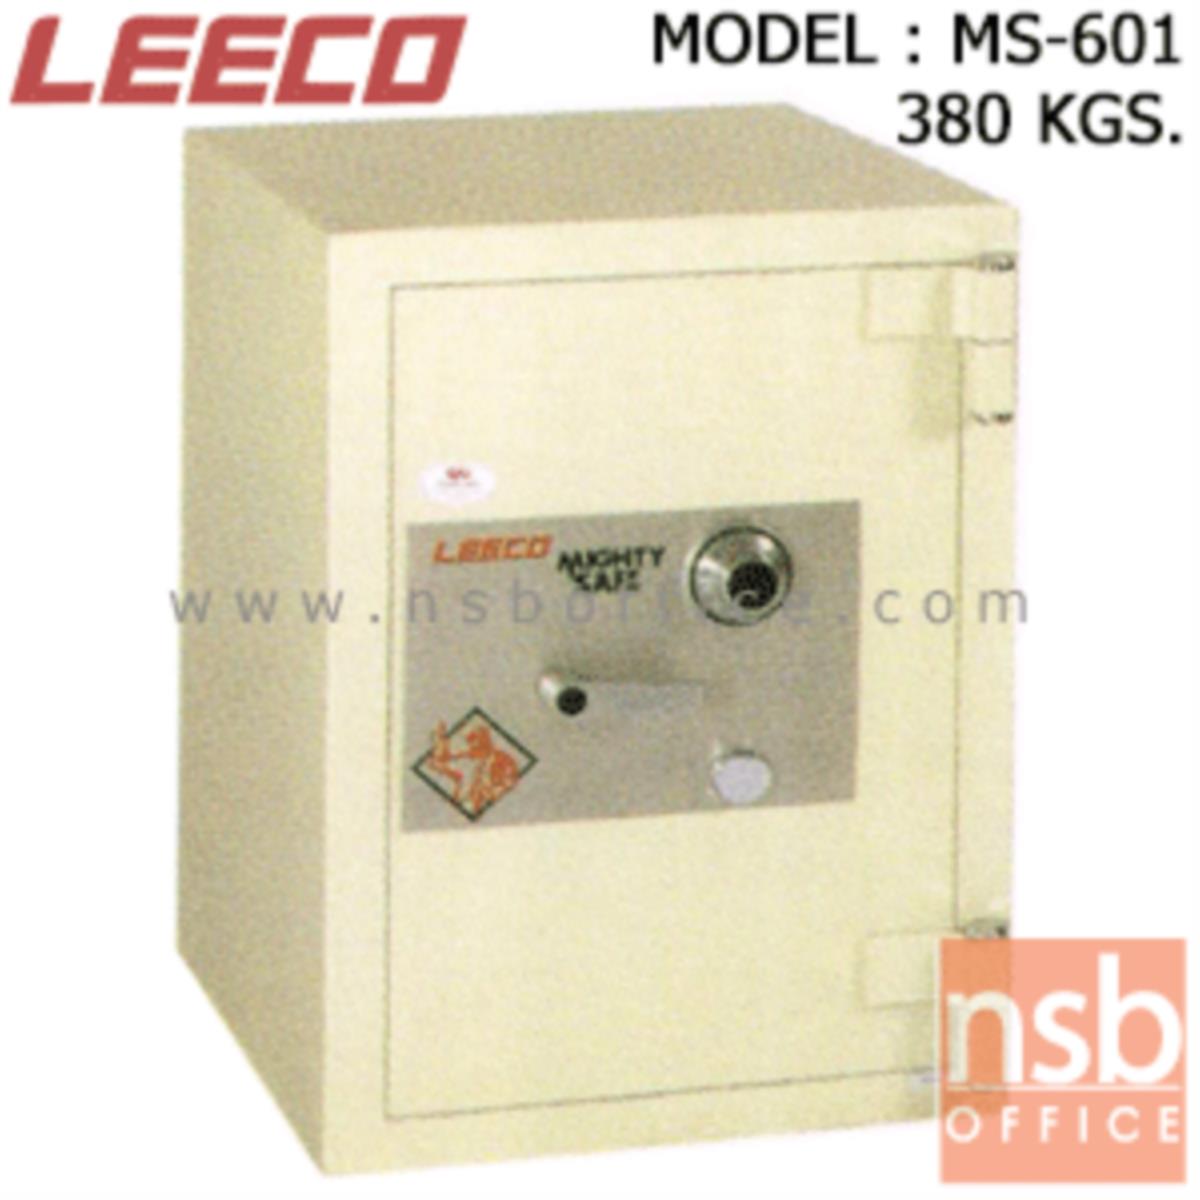 F02A018:ตู้เซฟนิรภัย 380 กก. ลีโก้ รุ่น LEECO-MS-601 มี 1 กุญแจ 1 รหัส (เปลี่ยนรหัสไม่ได้)   